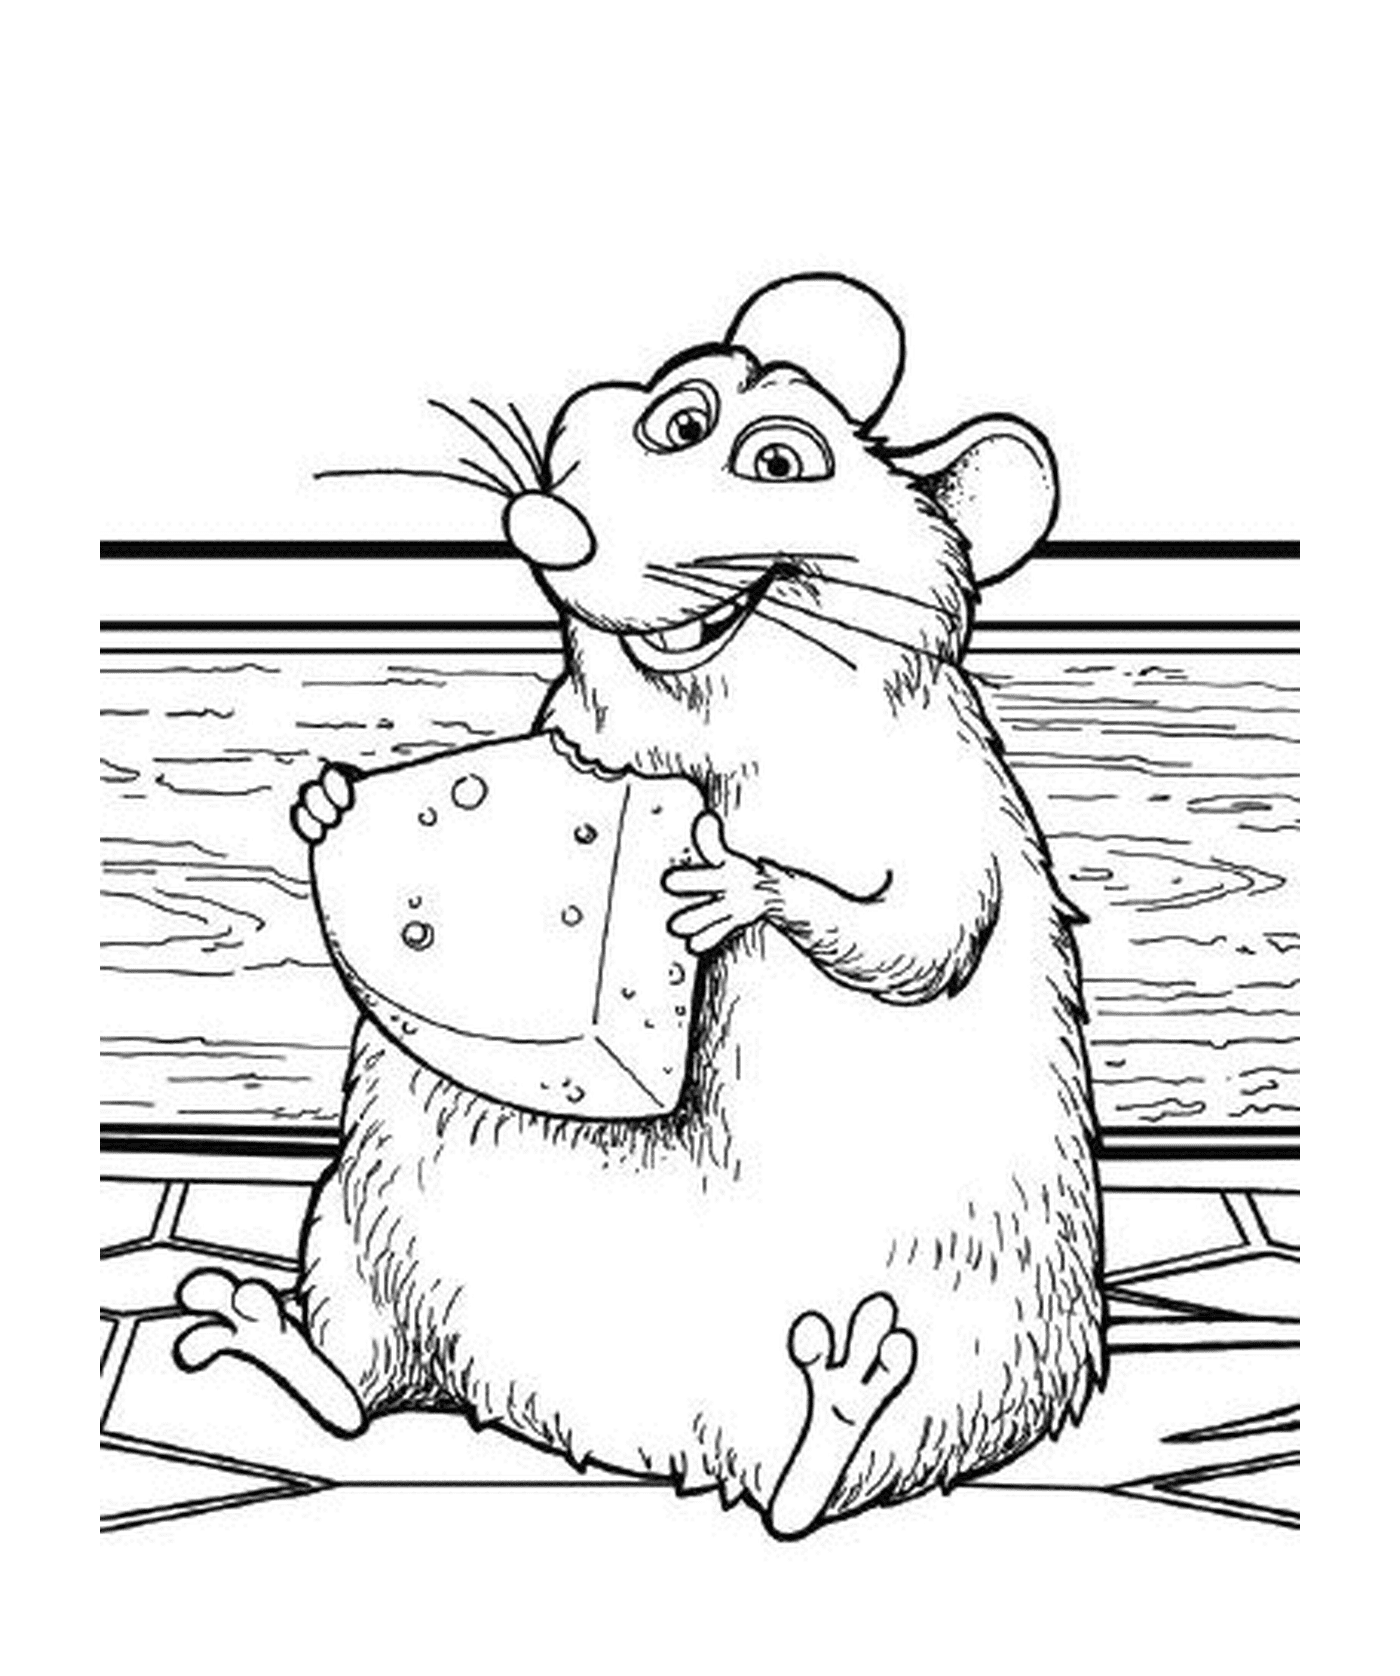  Ratatouille: um rato segurando queijo na boca 